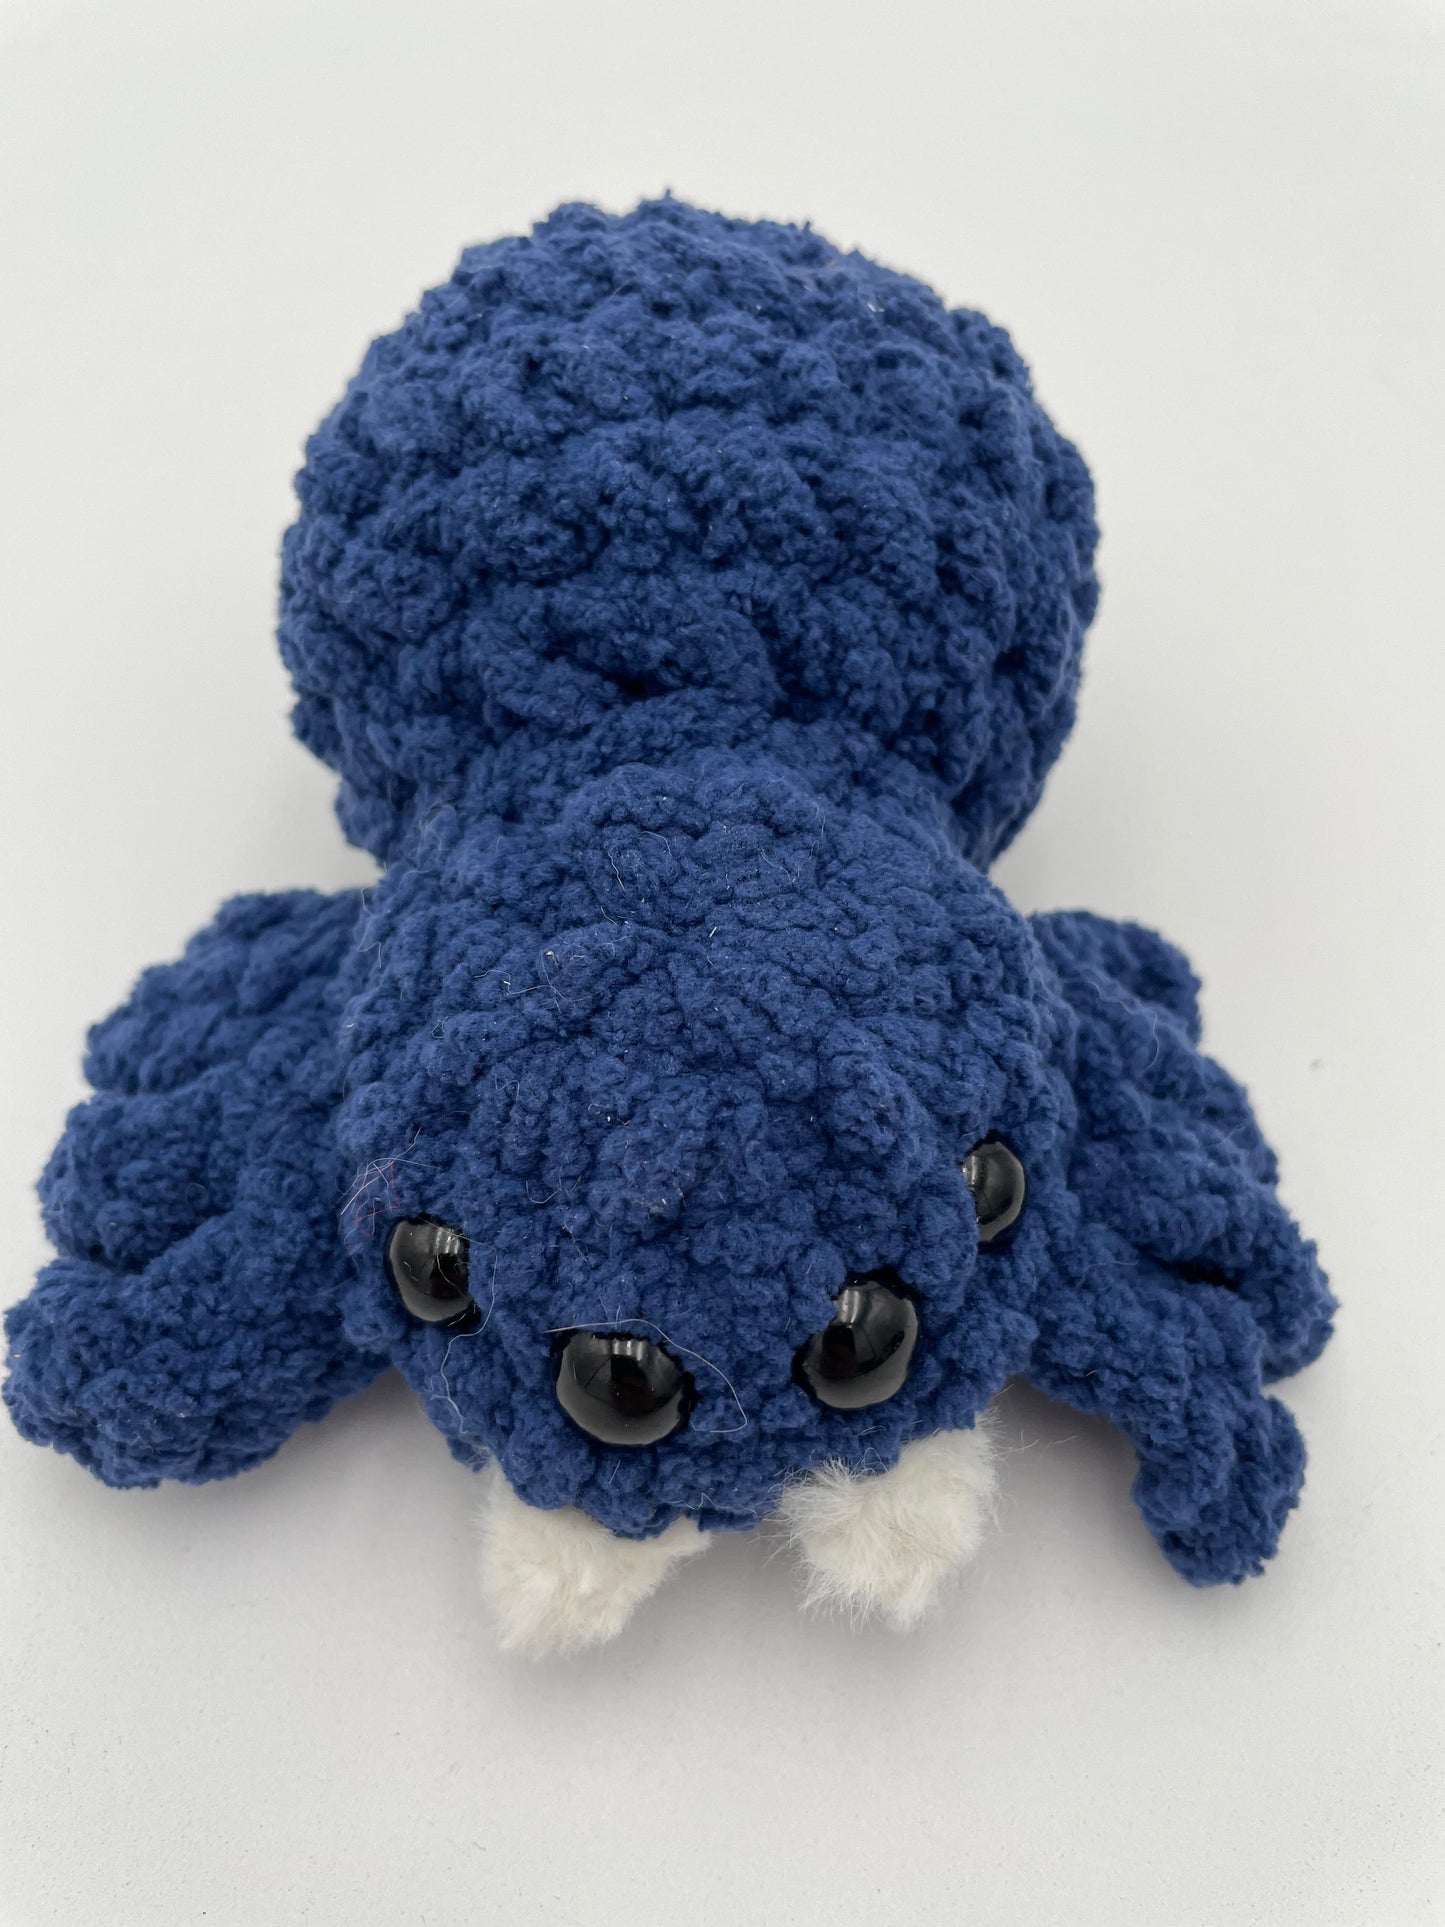 Cute Blue Crocheted Spider